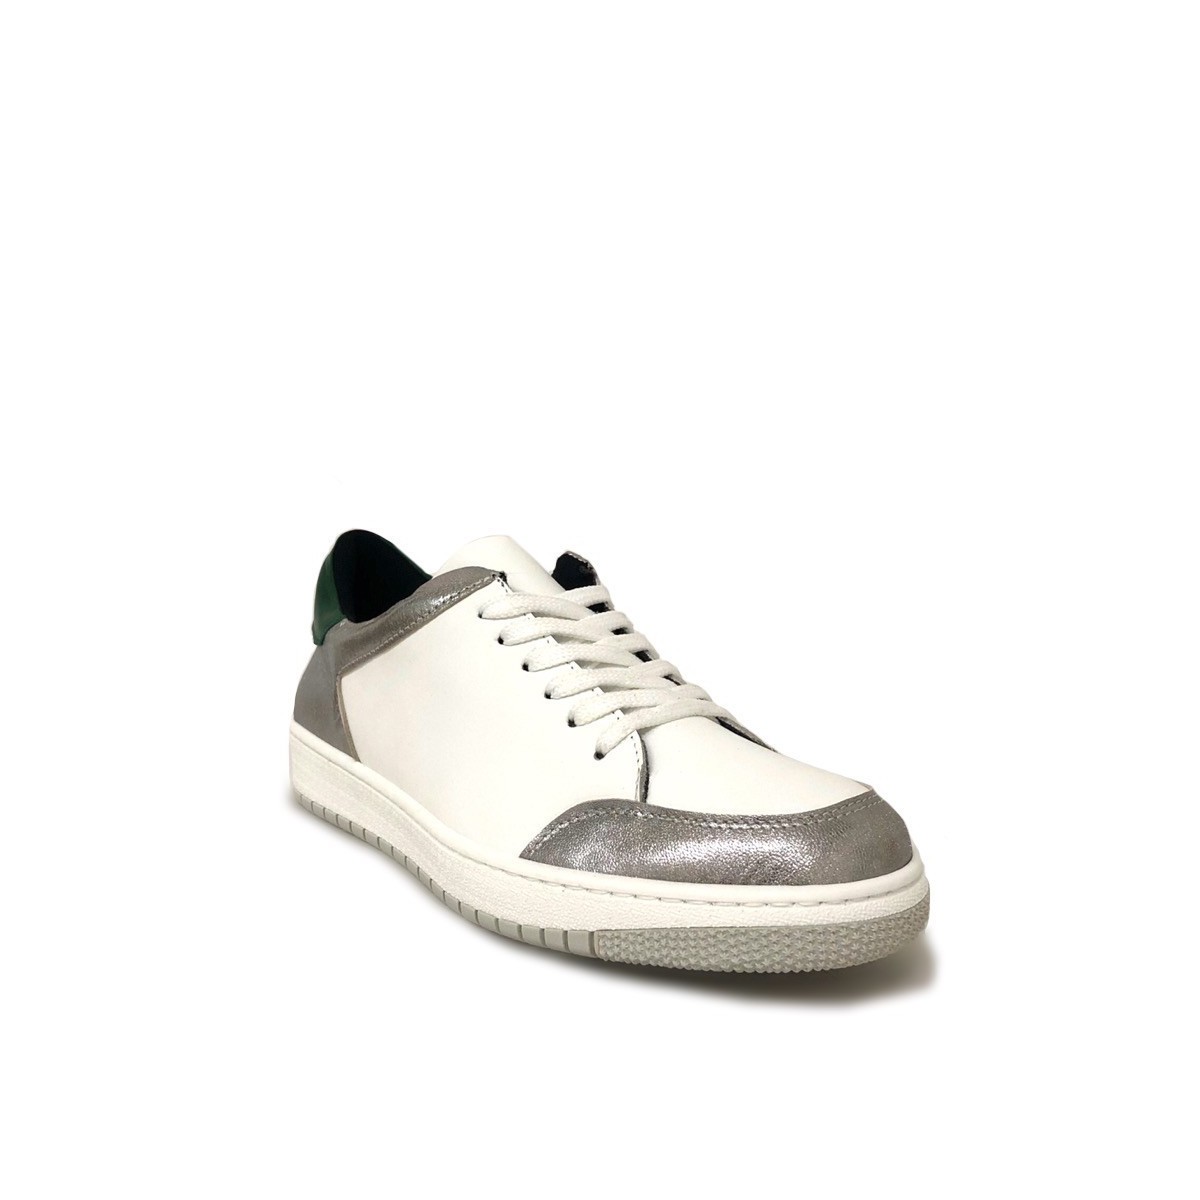 Sneakers bianche acciaio verde